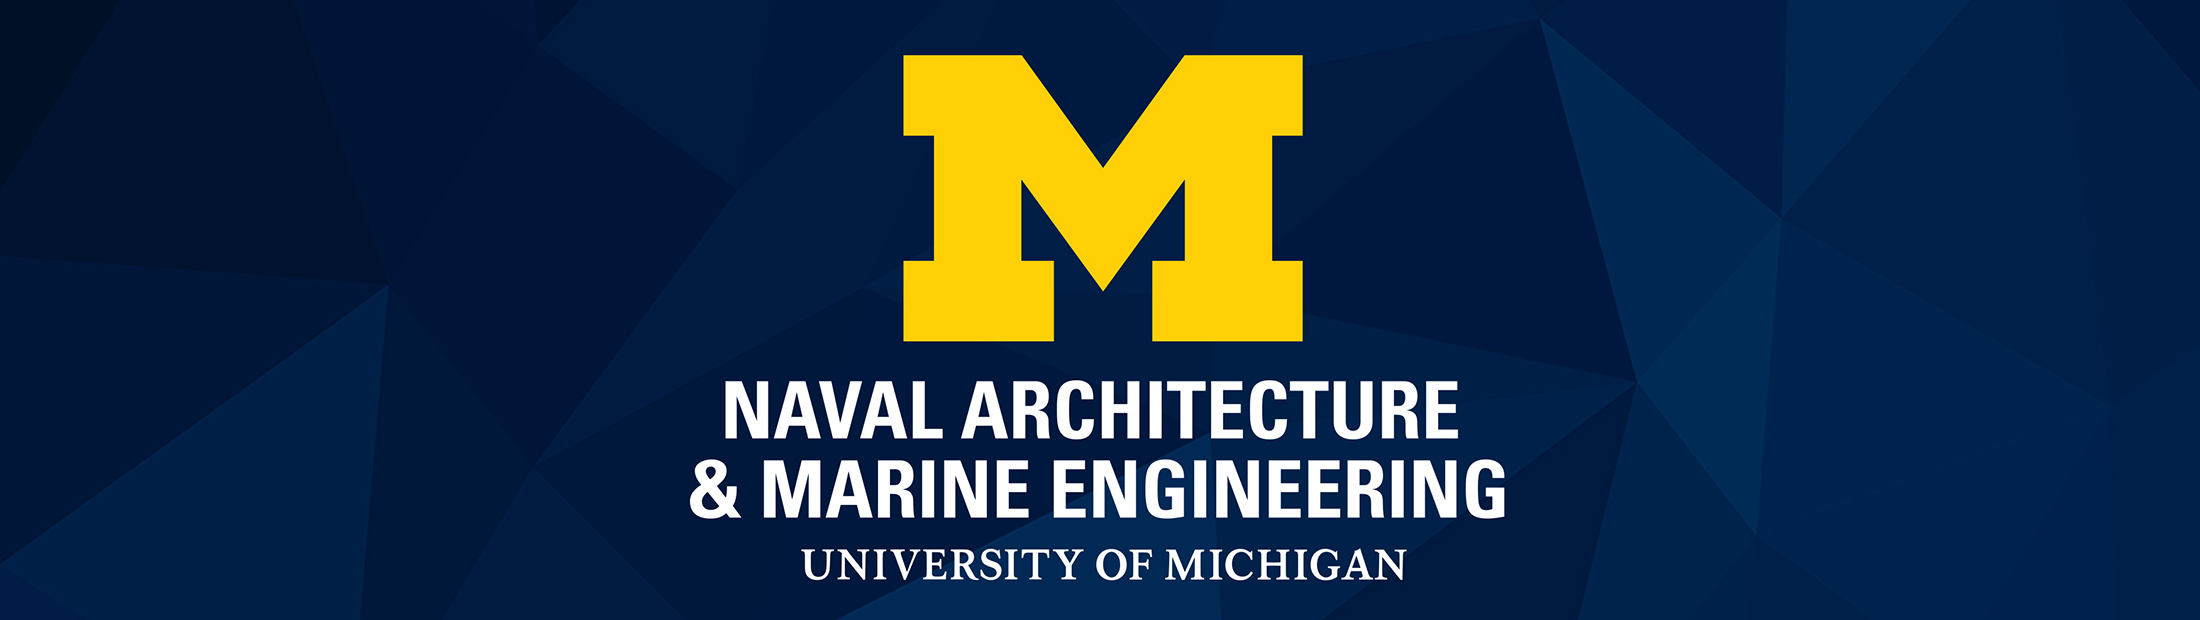 Naval Architecture & Marine Engineering logo